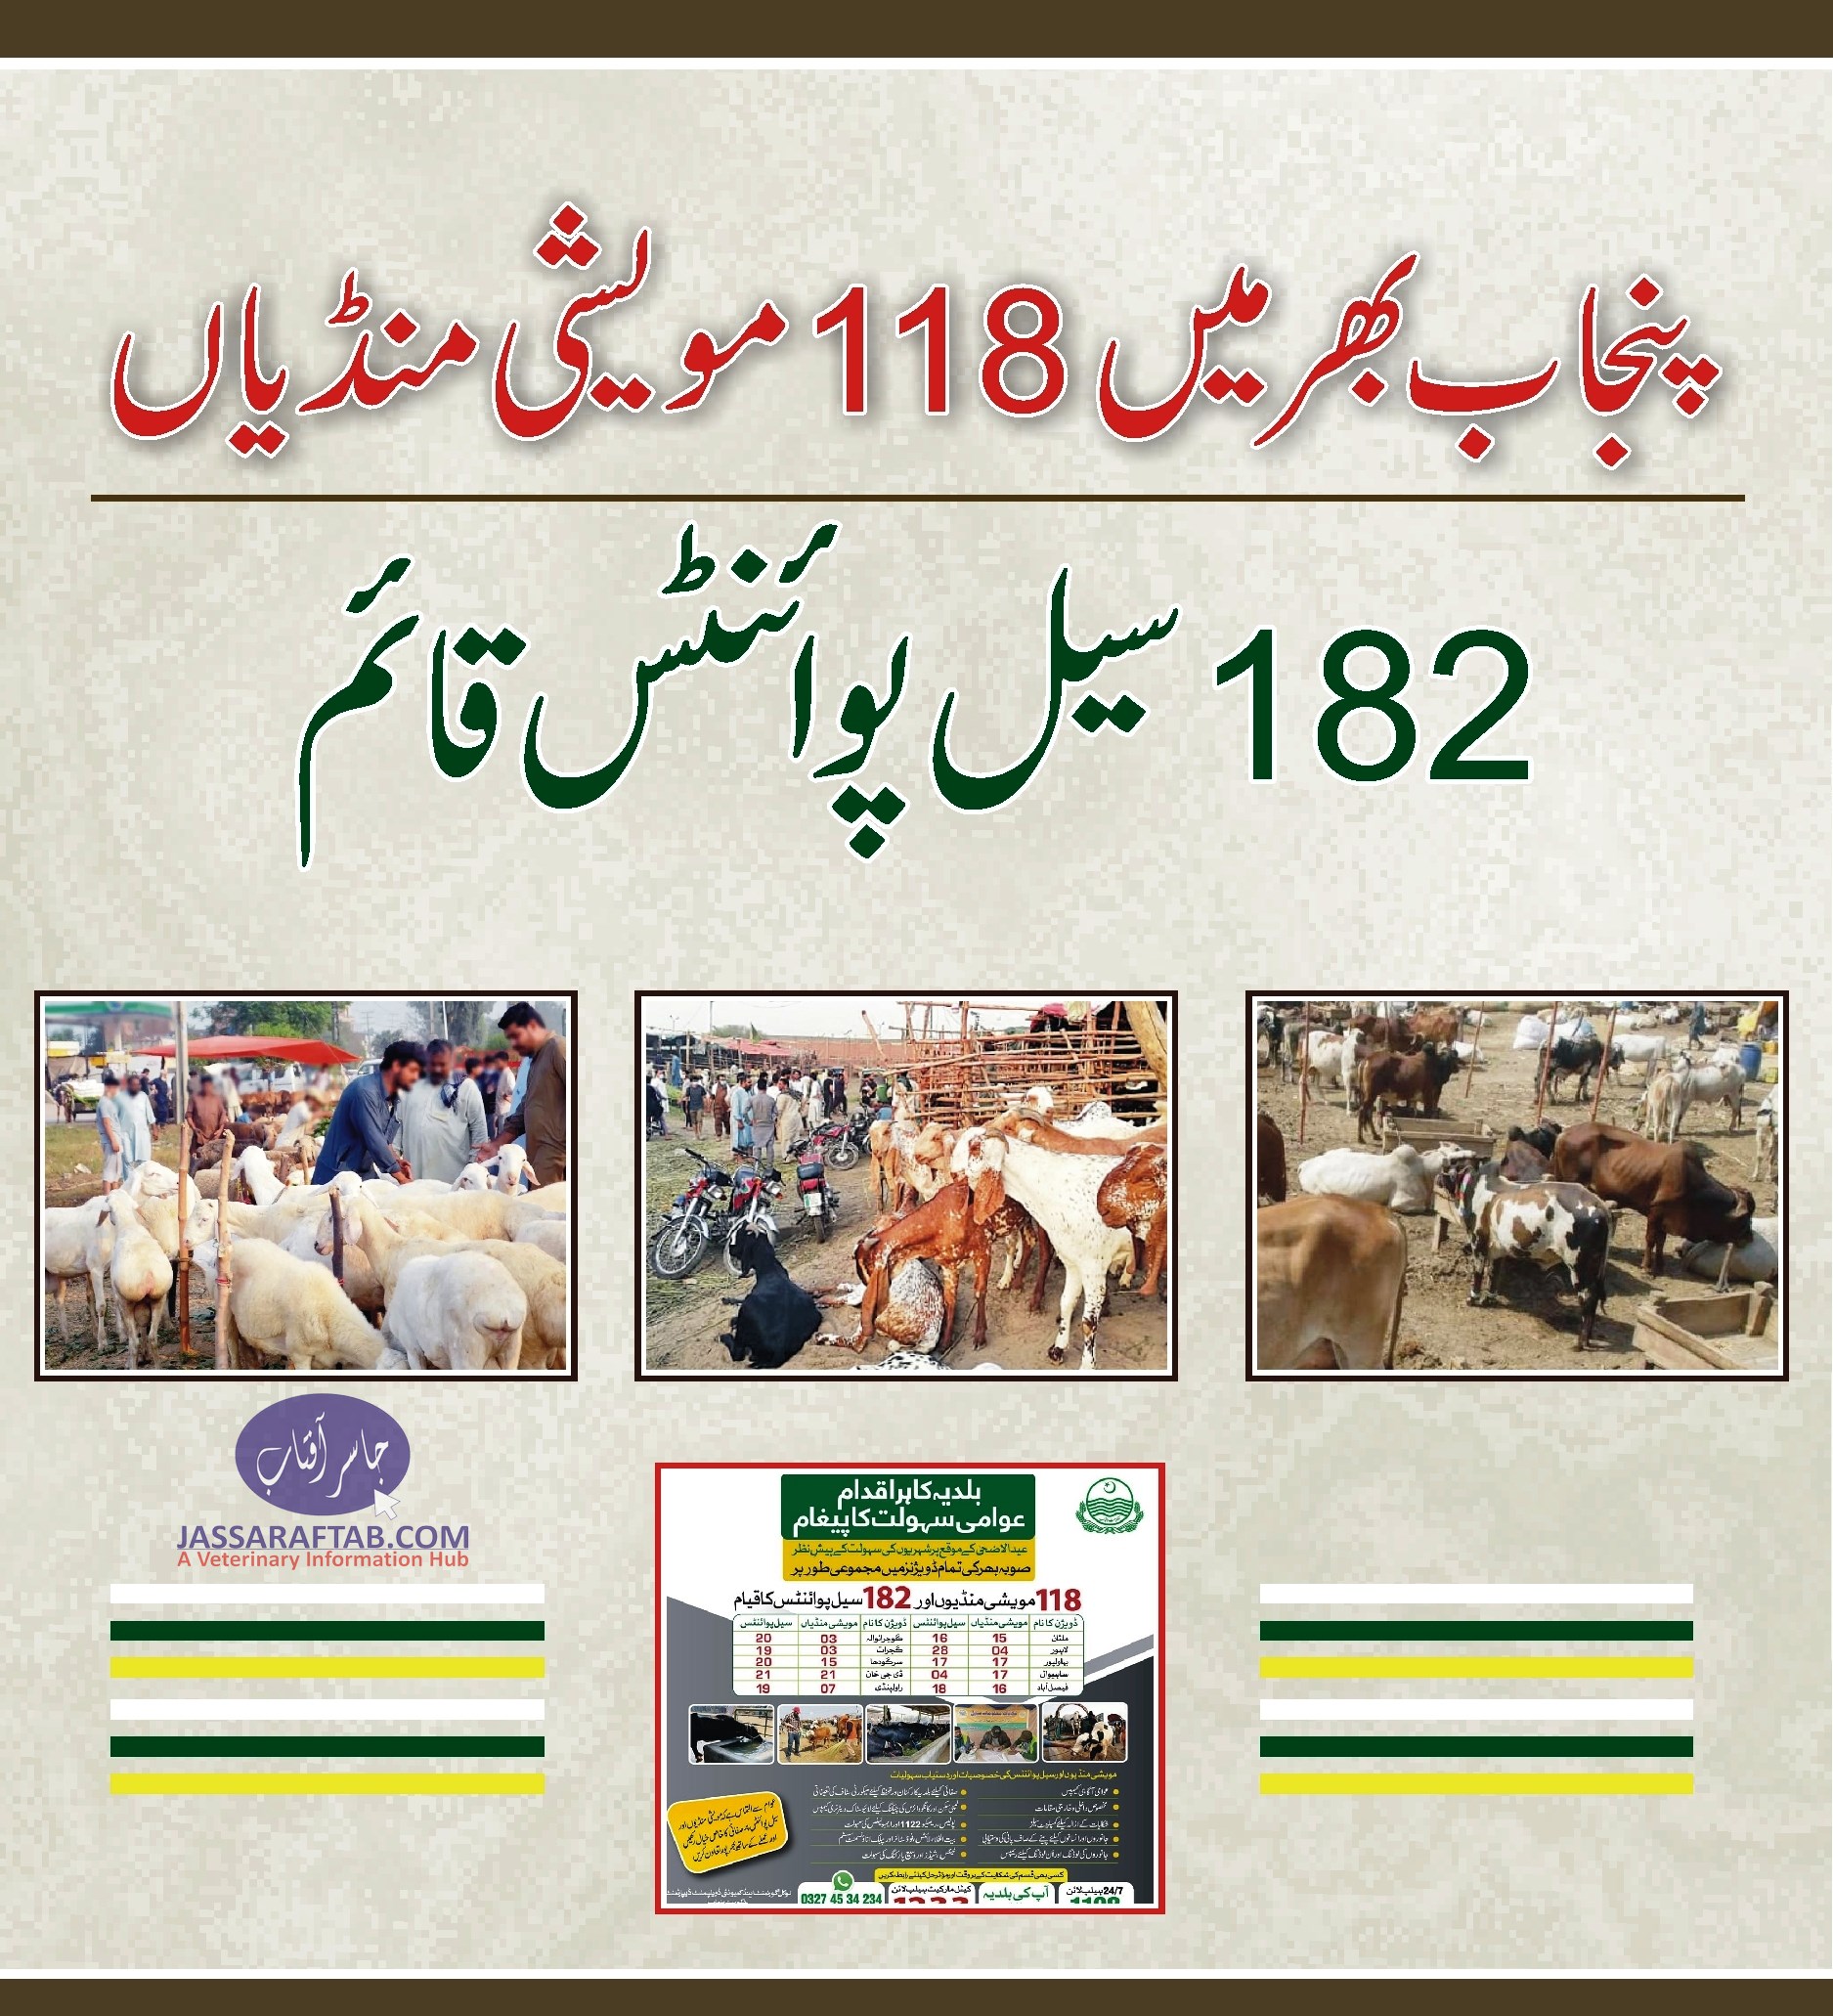 118 cattle markets set up across punjab